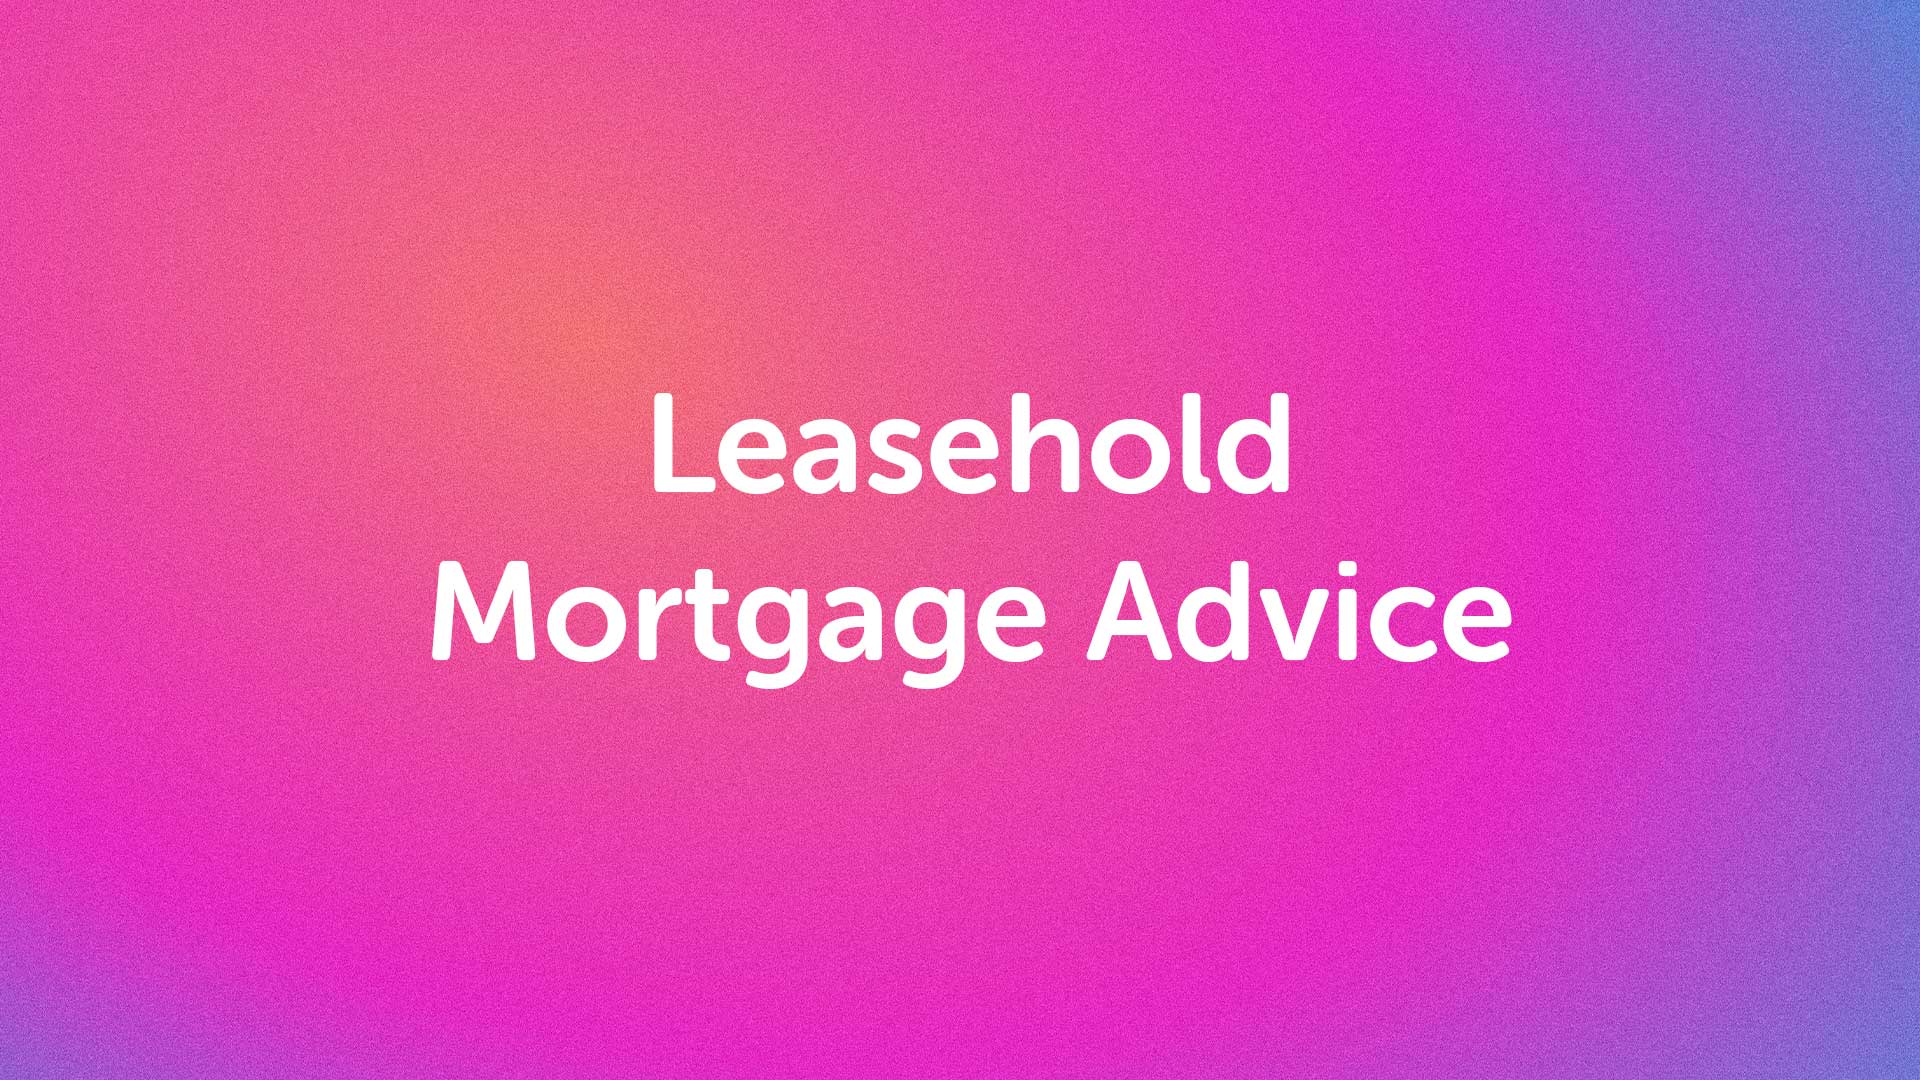 Leasehold Mortgage Advice in Leeds | Leedsmoneyman